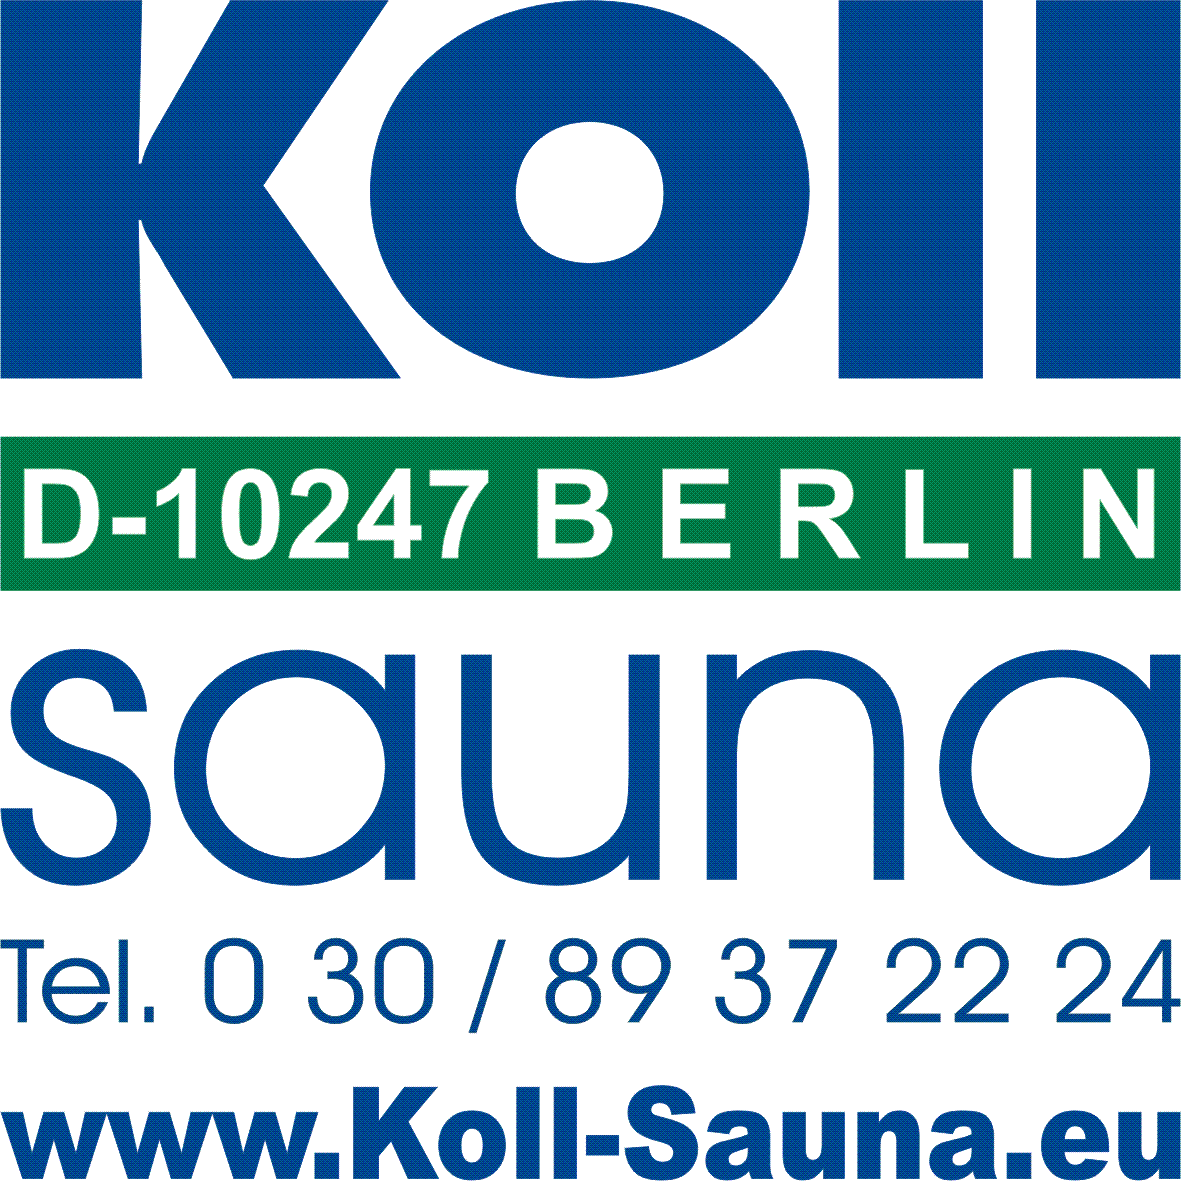 Koll Sauna Logo Berlin Delbrück München +++ Koll Saunabau der Saunahersteller